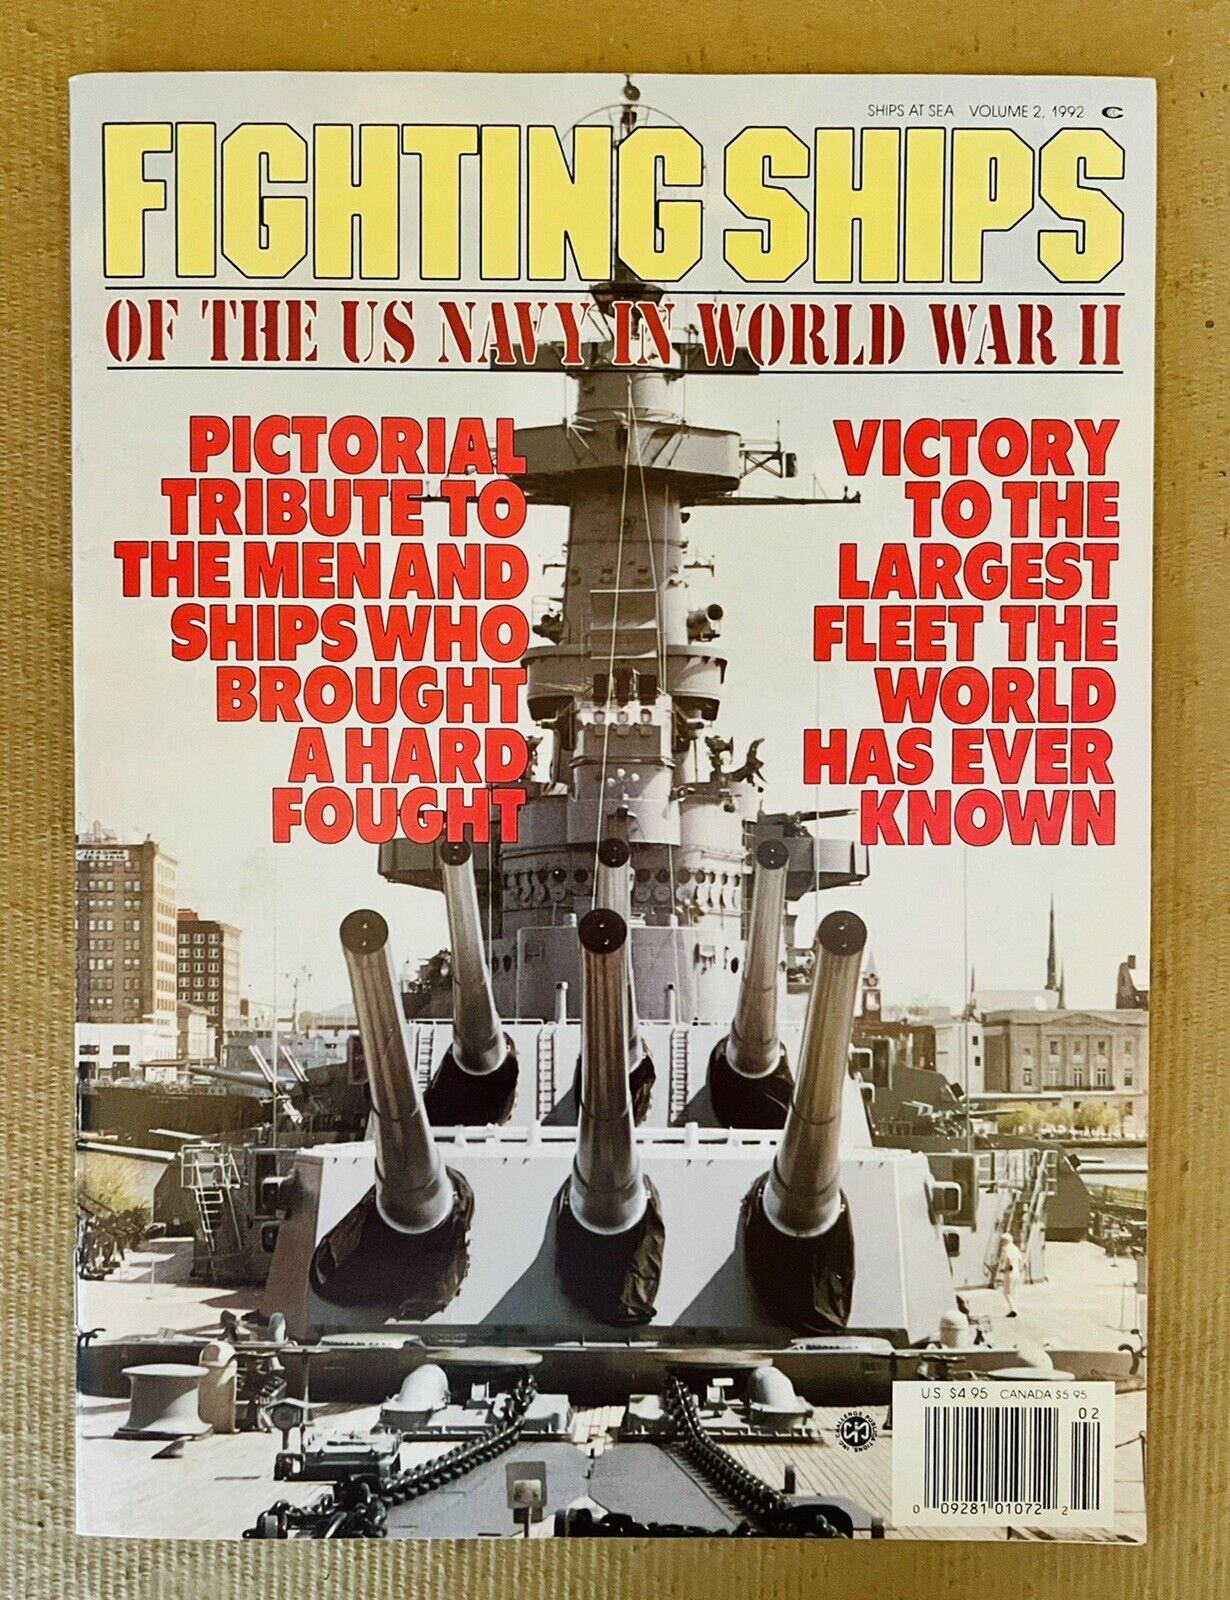 Fighting Ships Magazine Of The US Navy In World War II, Volume 2, 1992